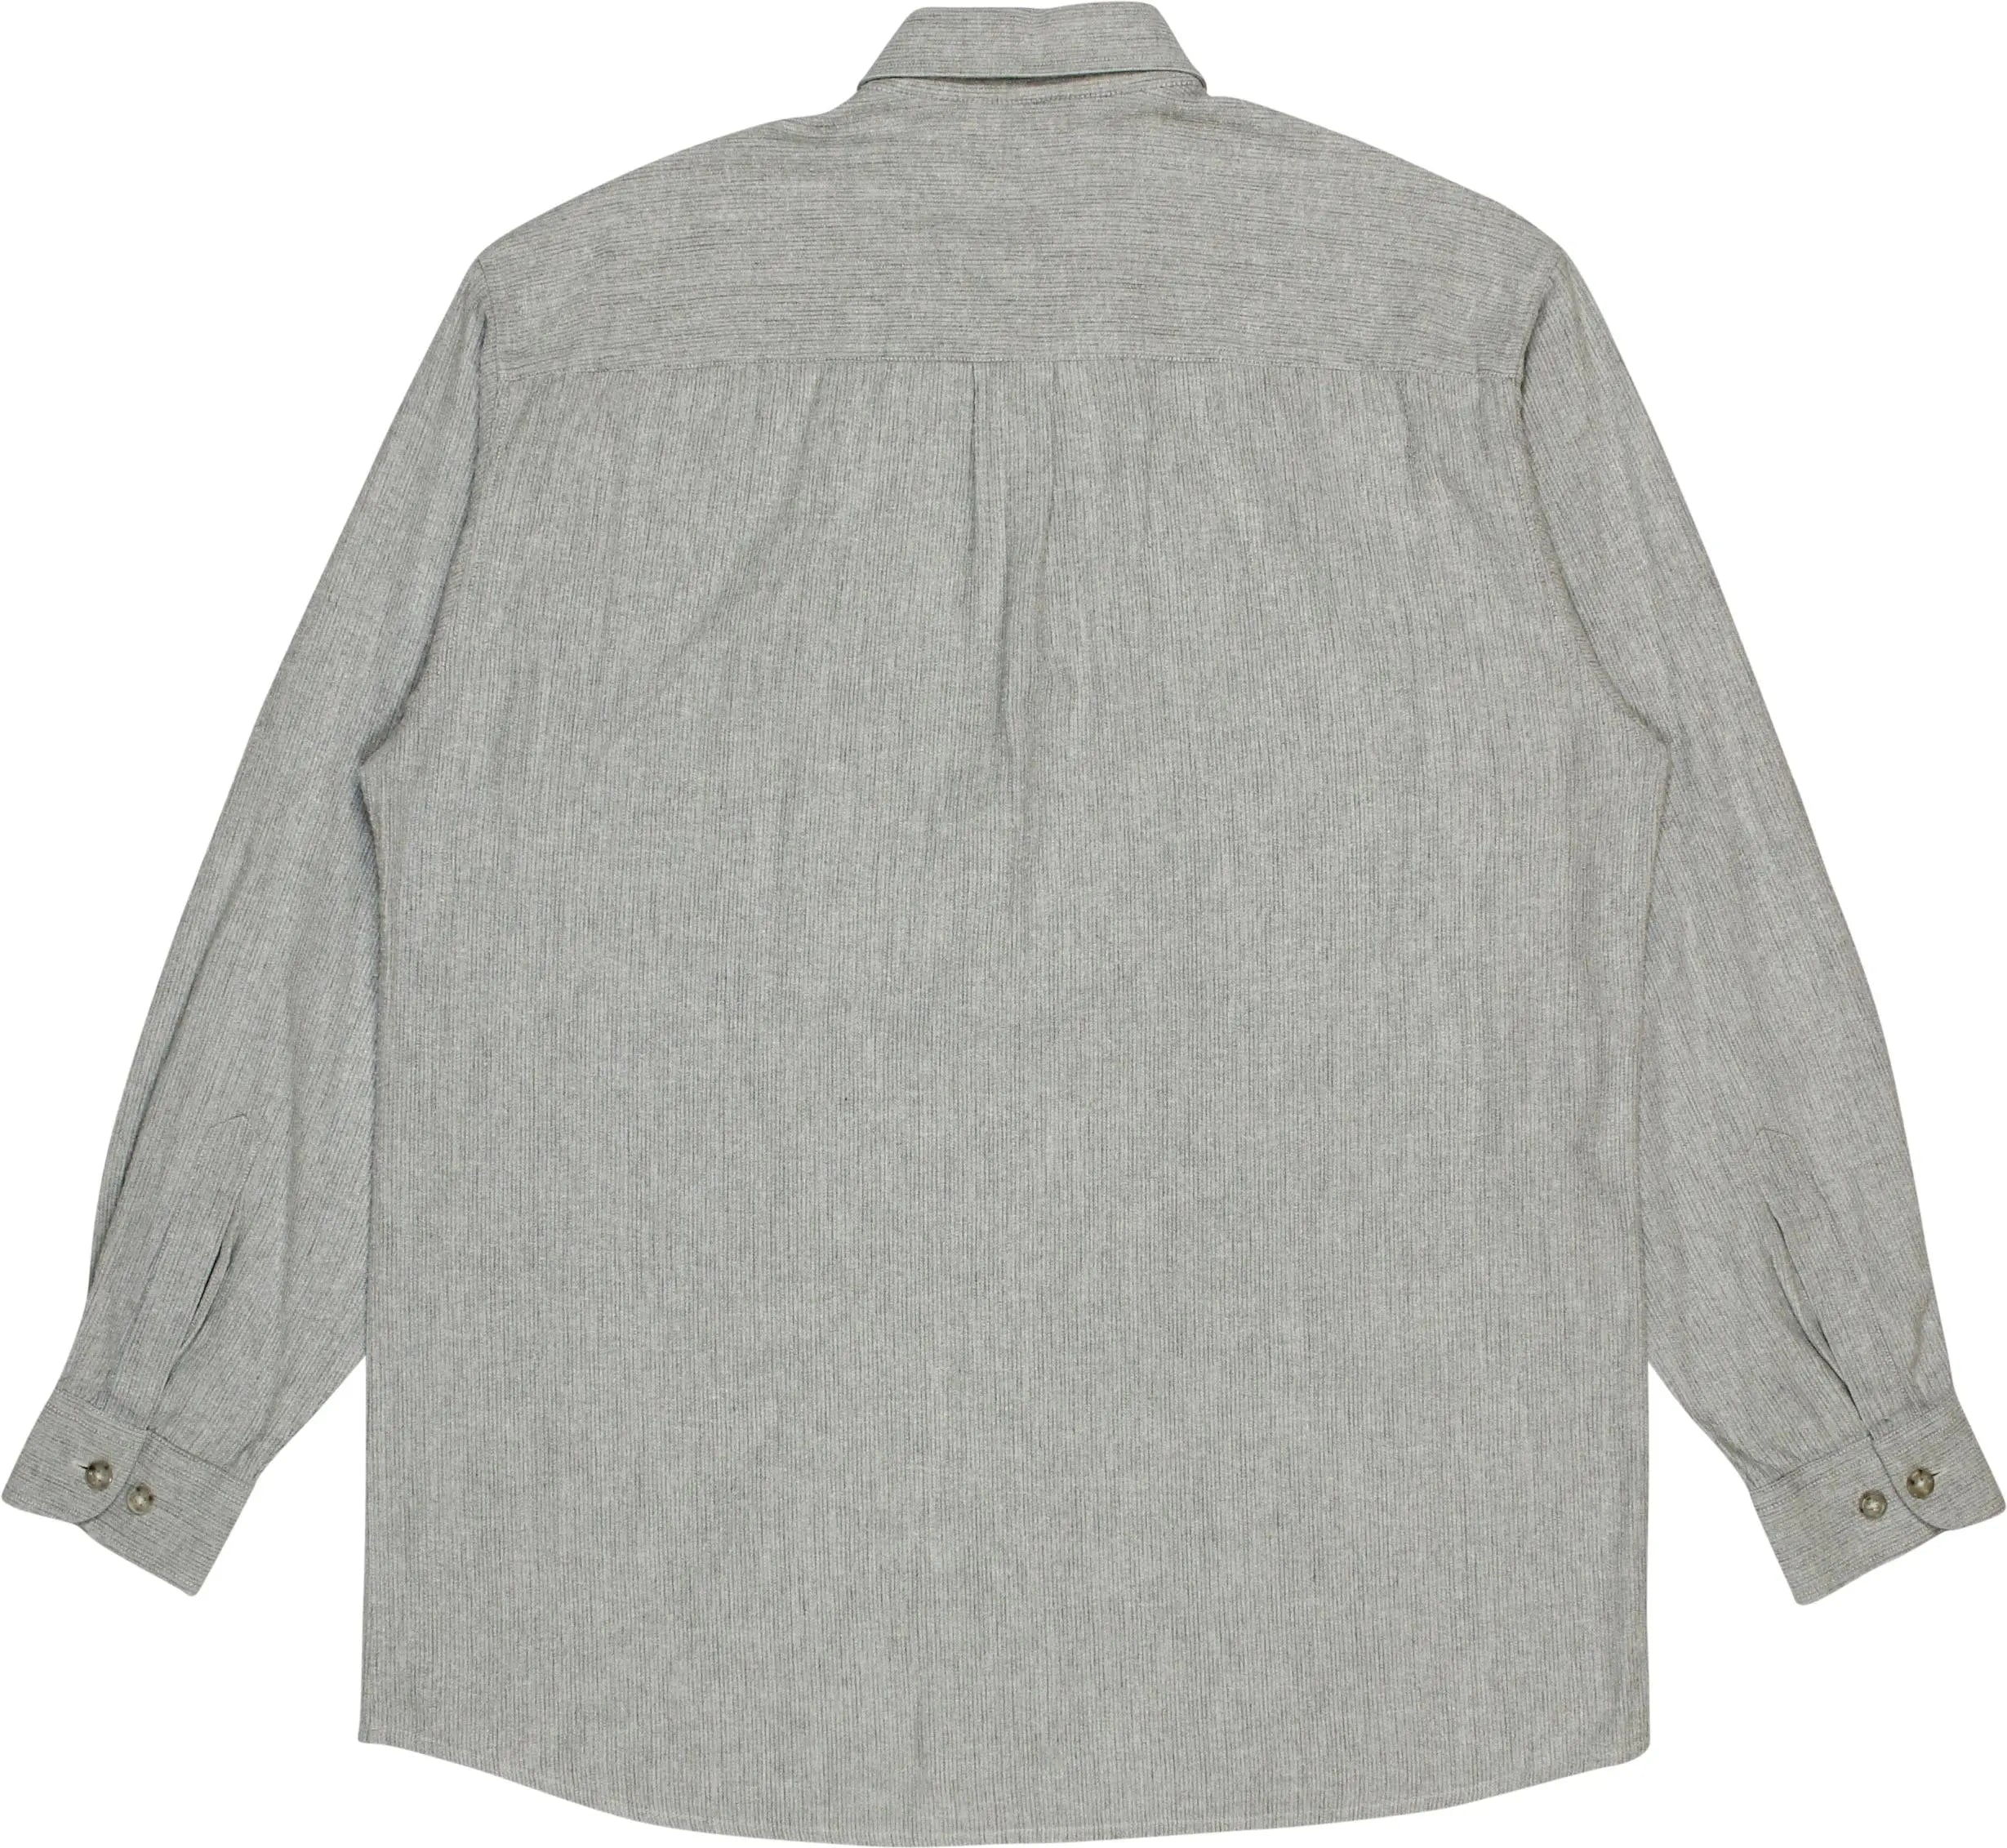 Jupiter - Grey Long Sleeve Shirt- ThriftTale.com - Vintage and second handclothing